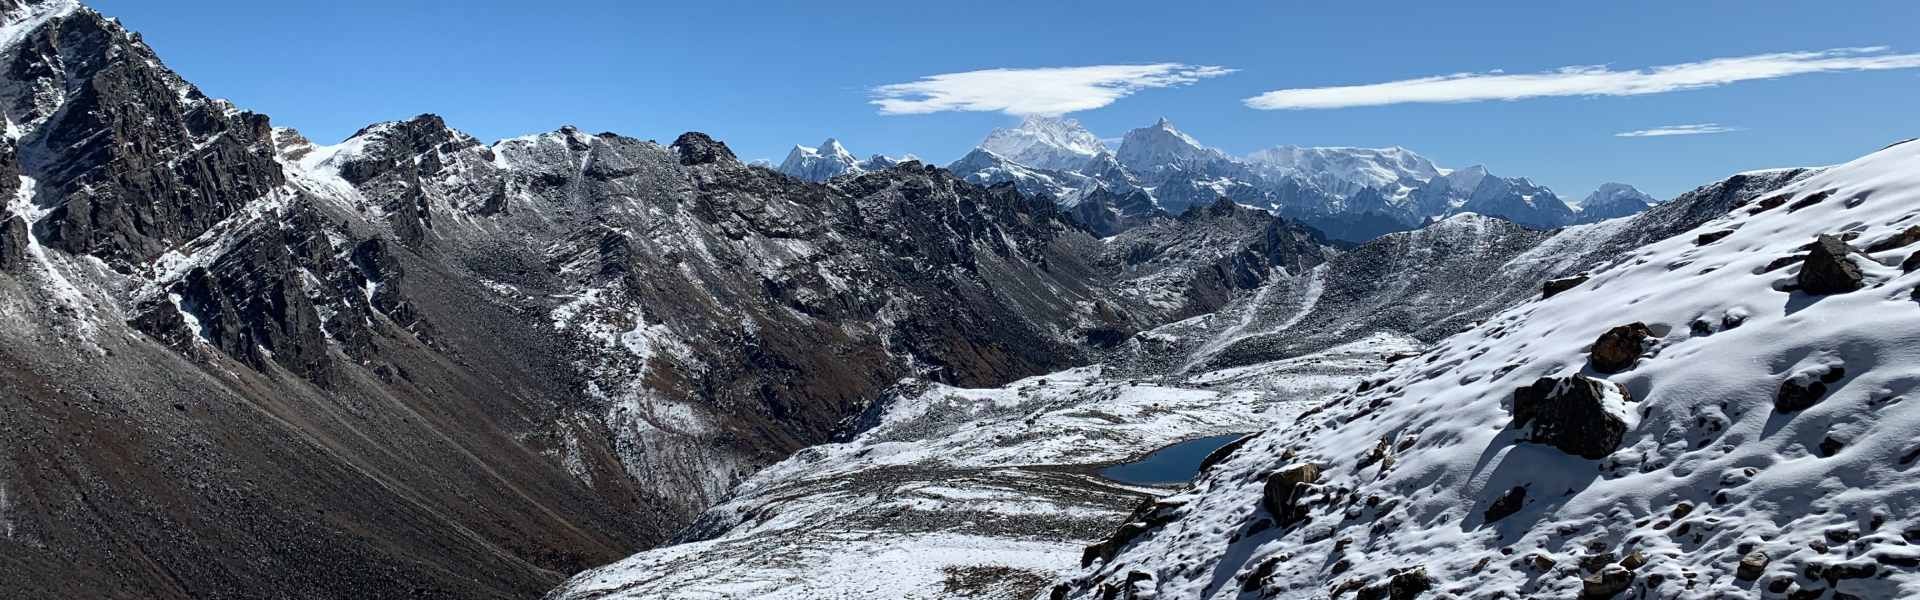 Trekking Eastern Nepal, Trekking Planner Inc., central himalayan region